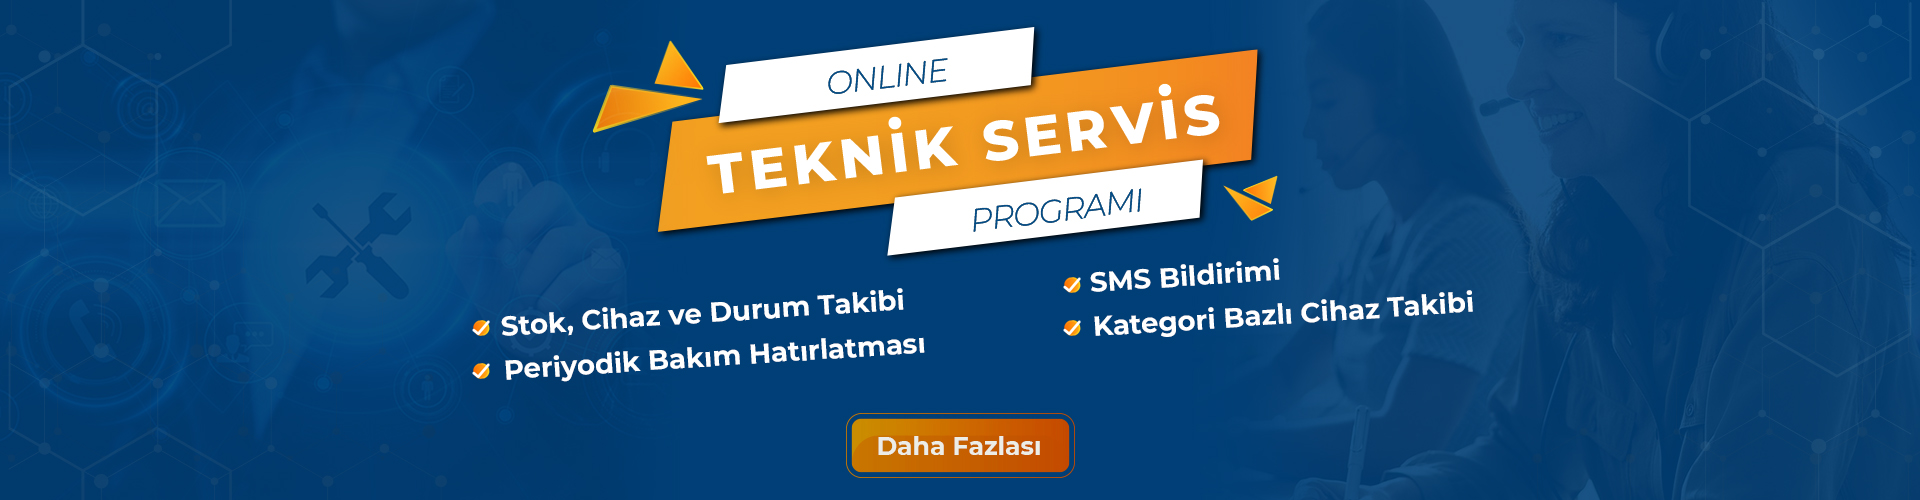 online teknik servis program